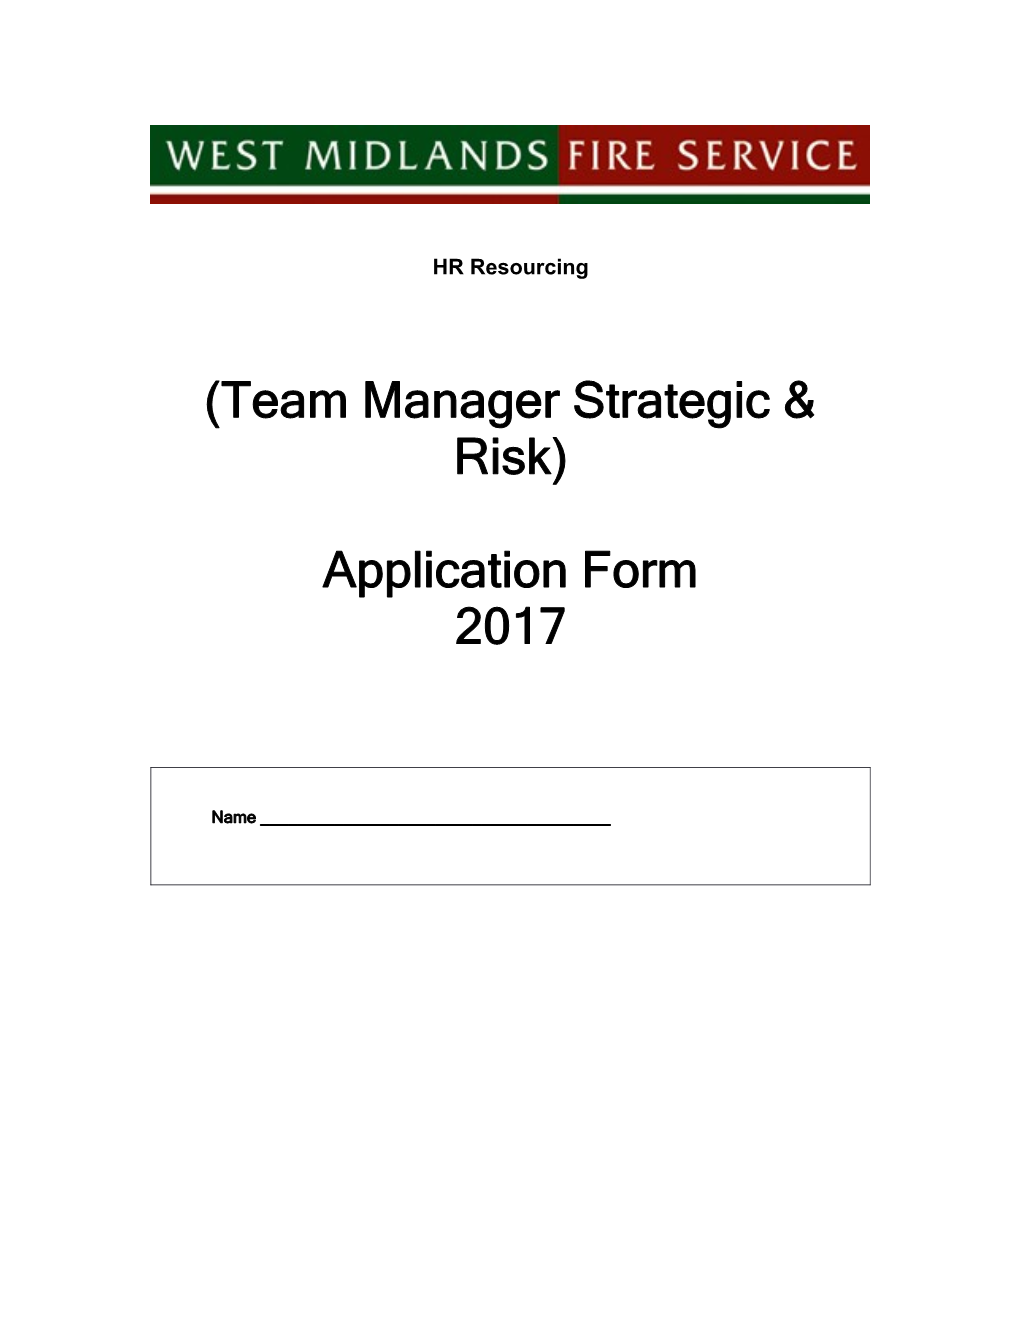 Team Manager Strategic & Risk